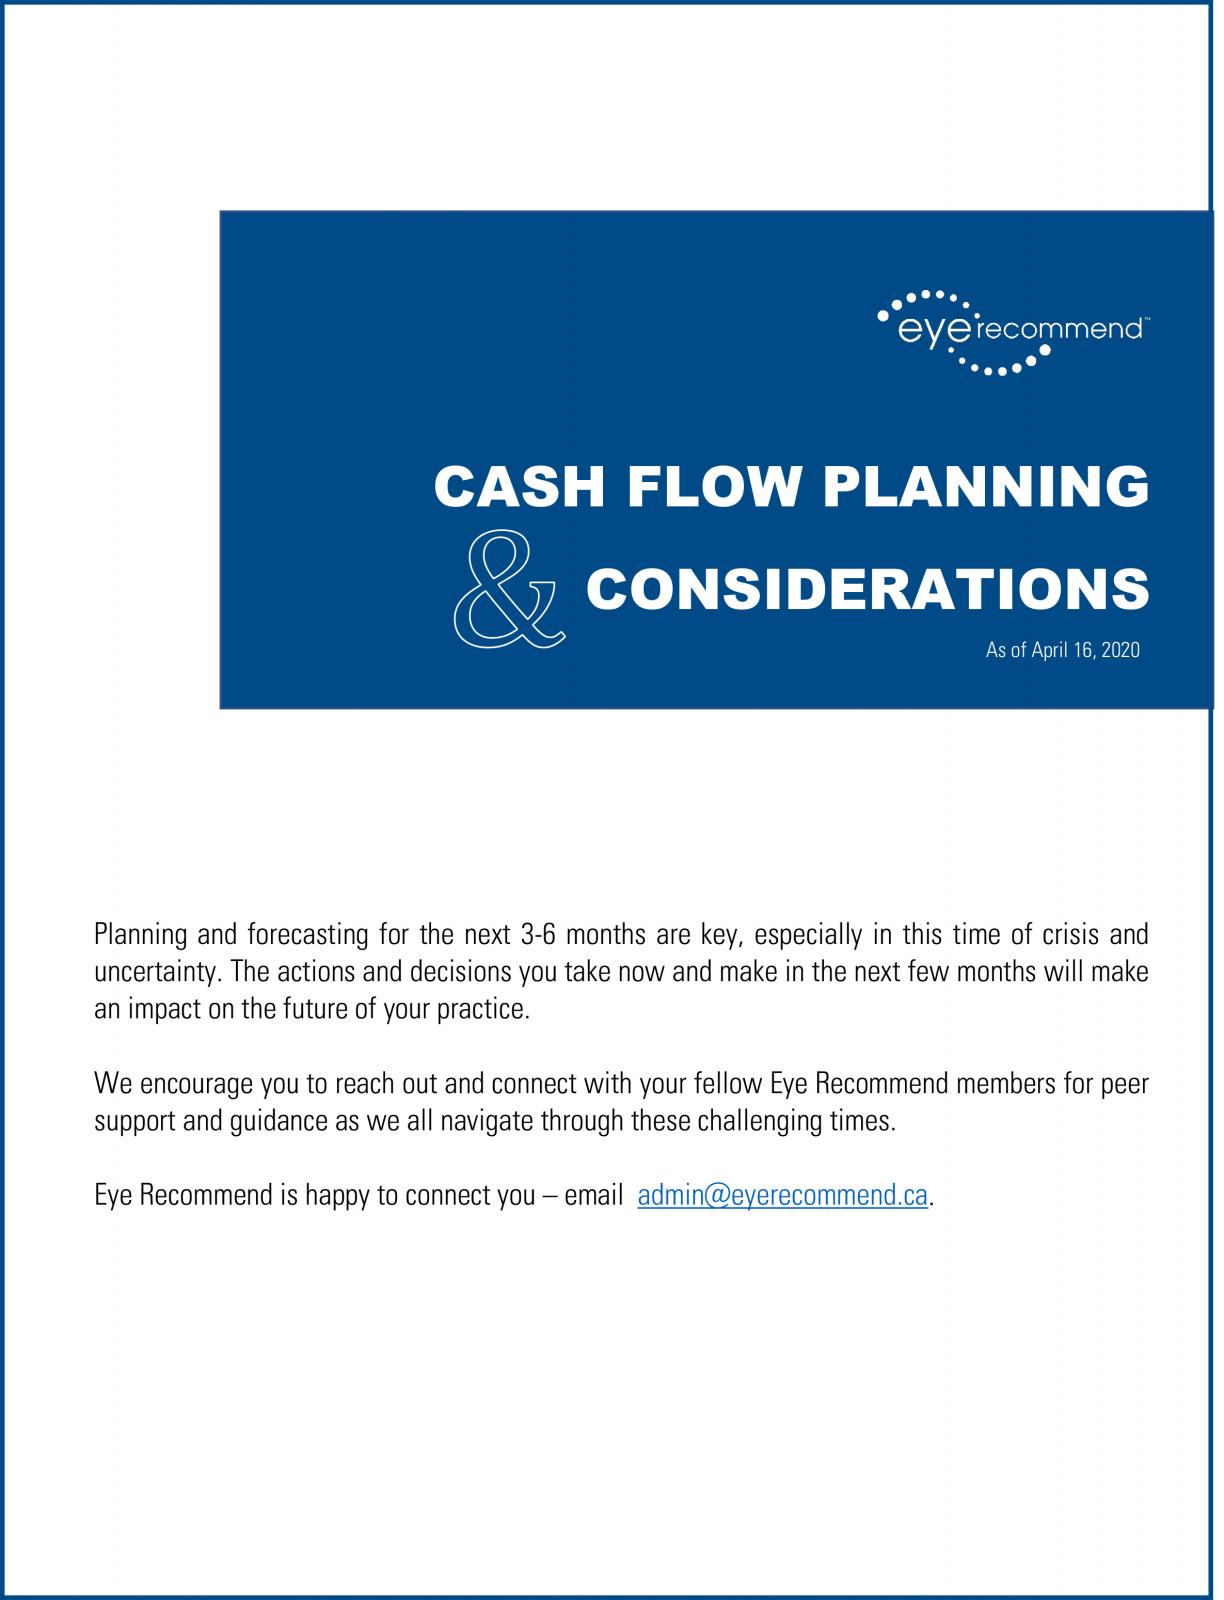 CASH FLOW PLANNING & CONSIDERATIONS